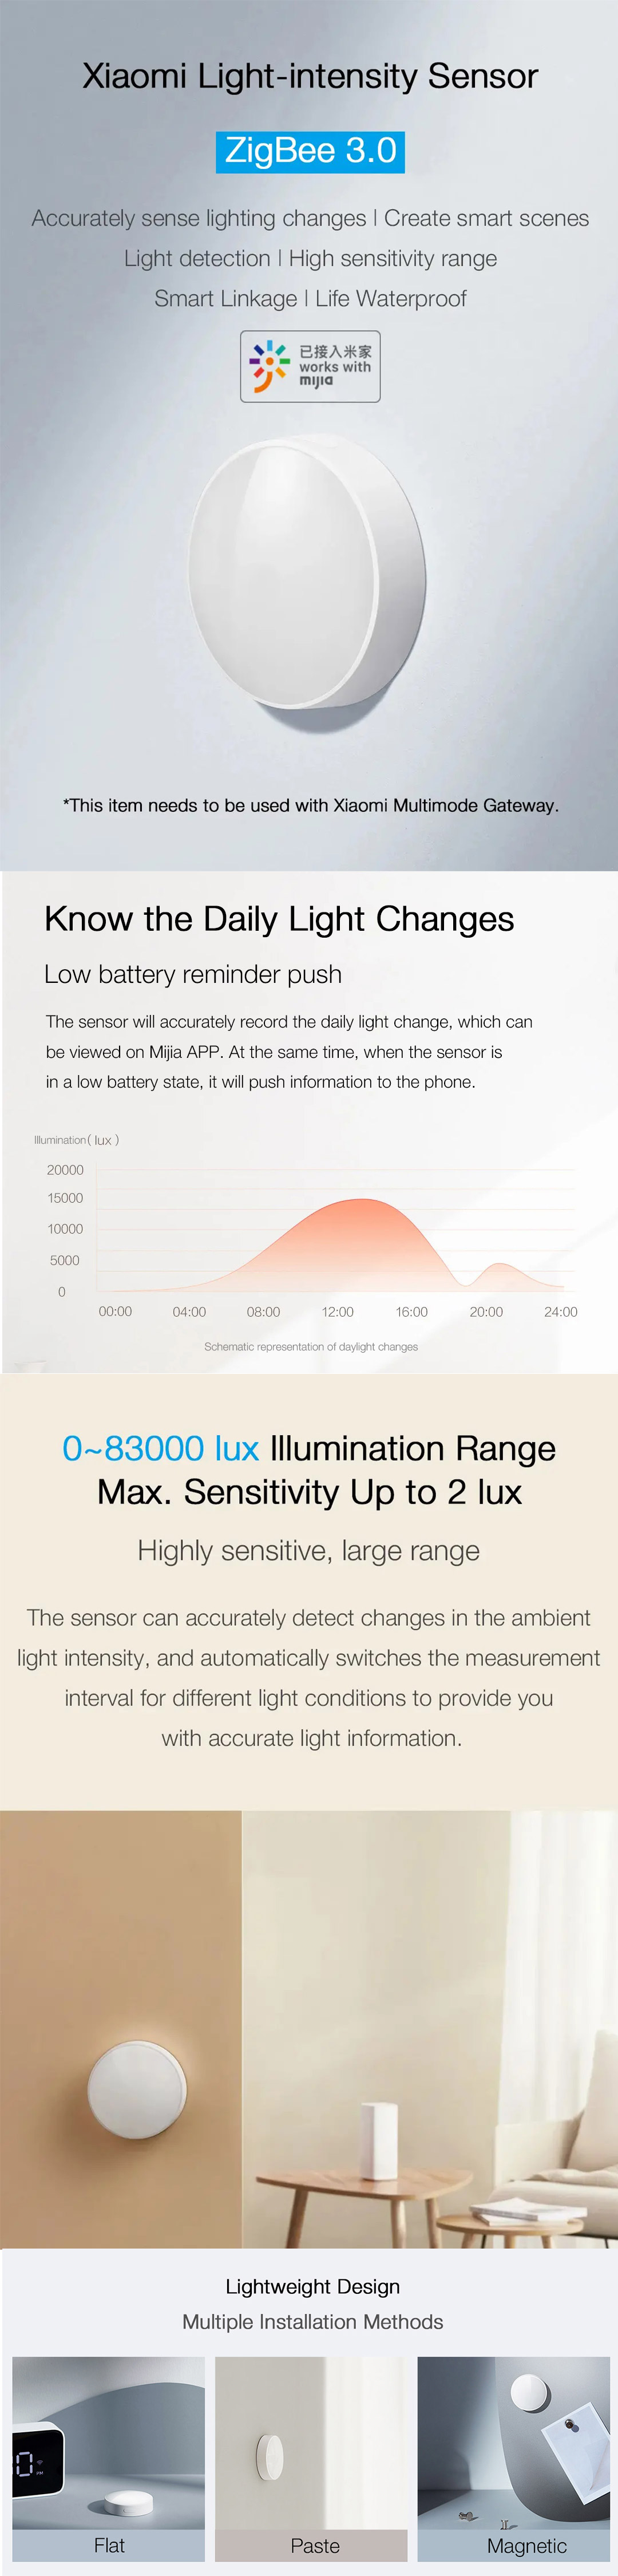 Xiaomi Mi Light Detection Sensor - Senzor Osvetlitve